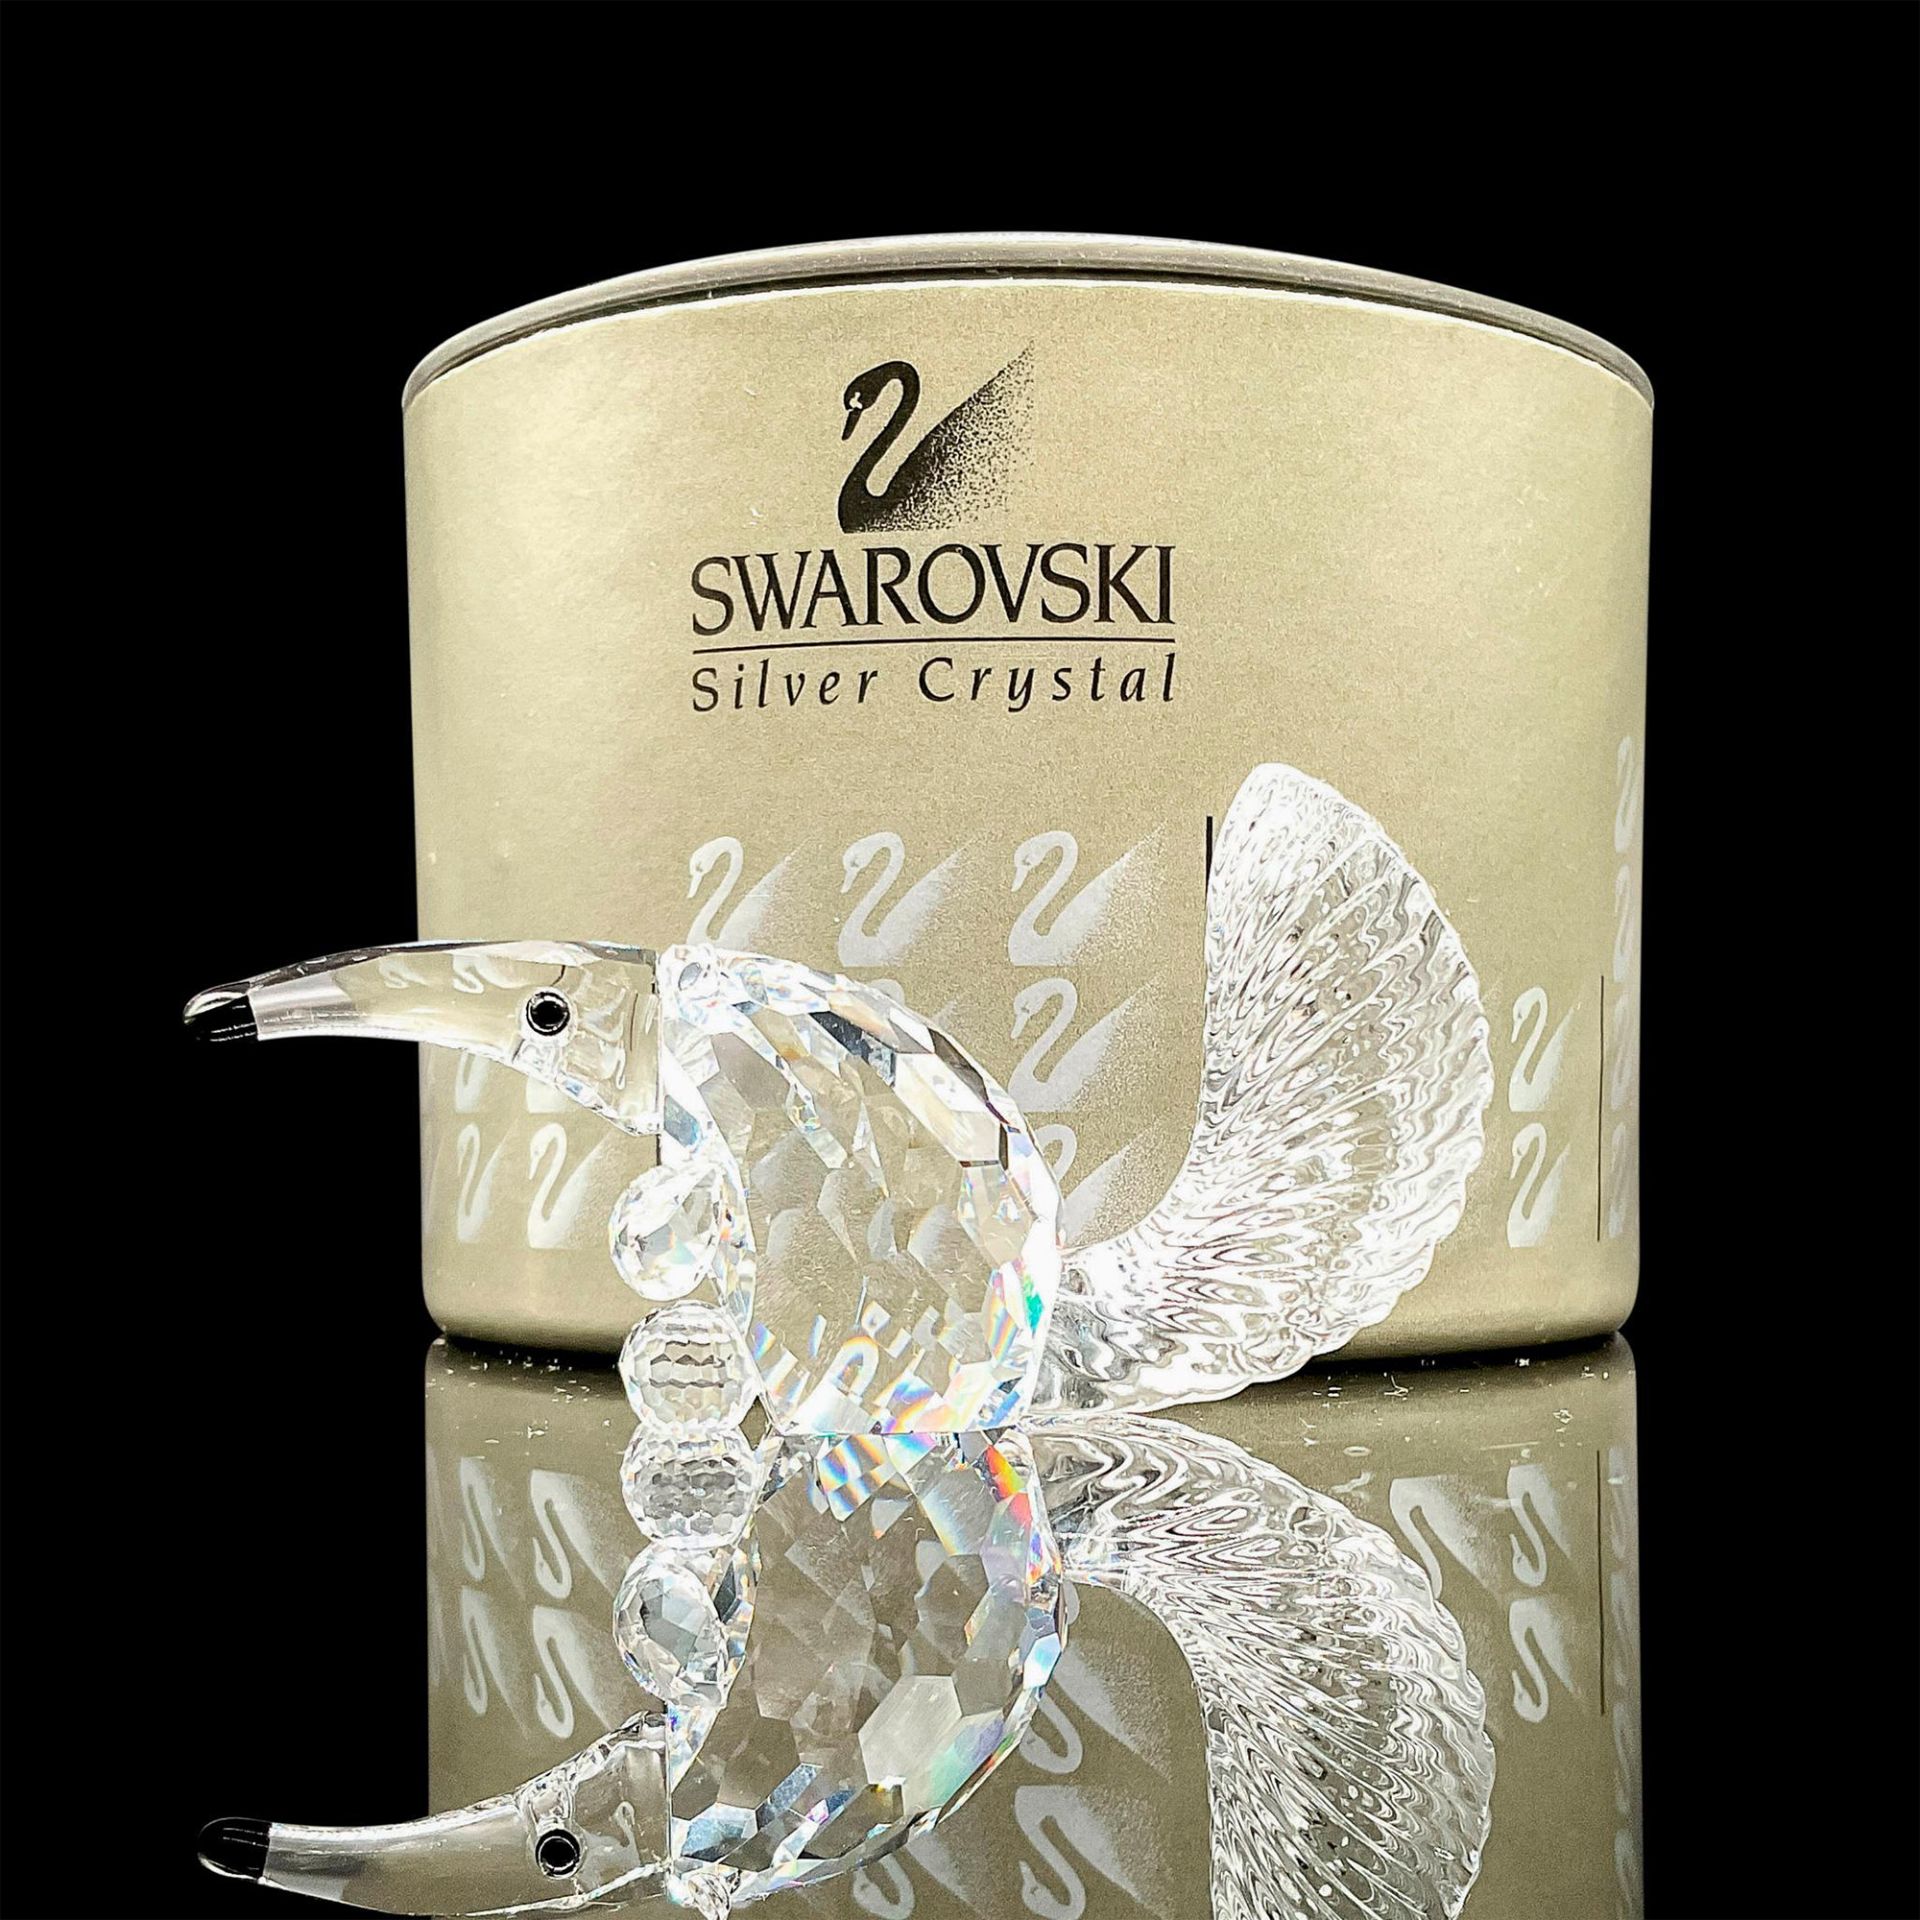 Swarovski Silver Crystal Miniature Figurine, Anteater - Image 2 of 4